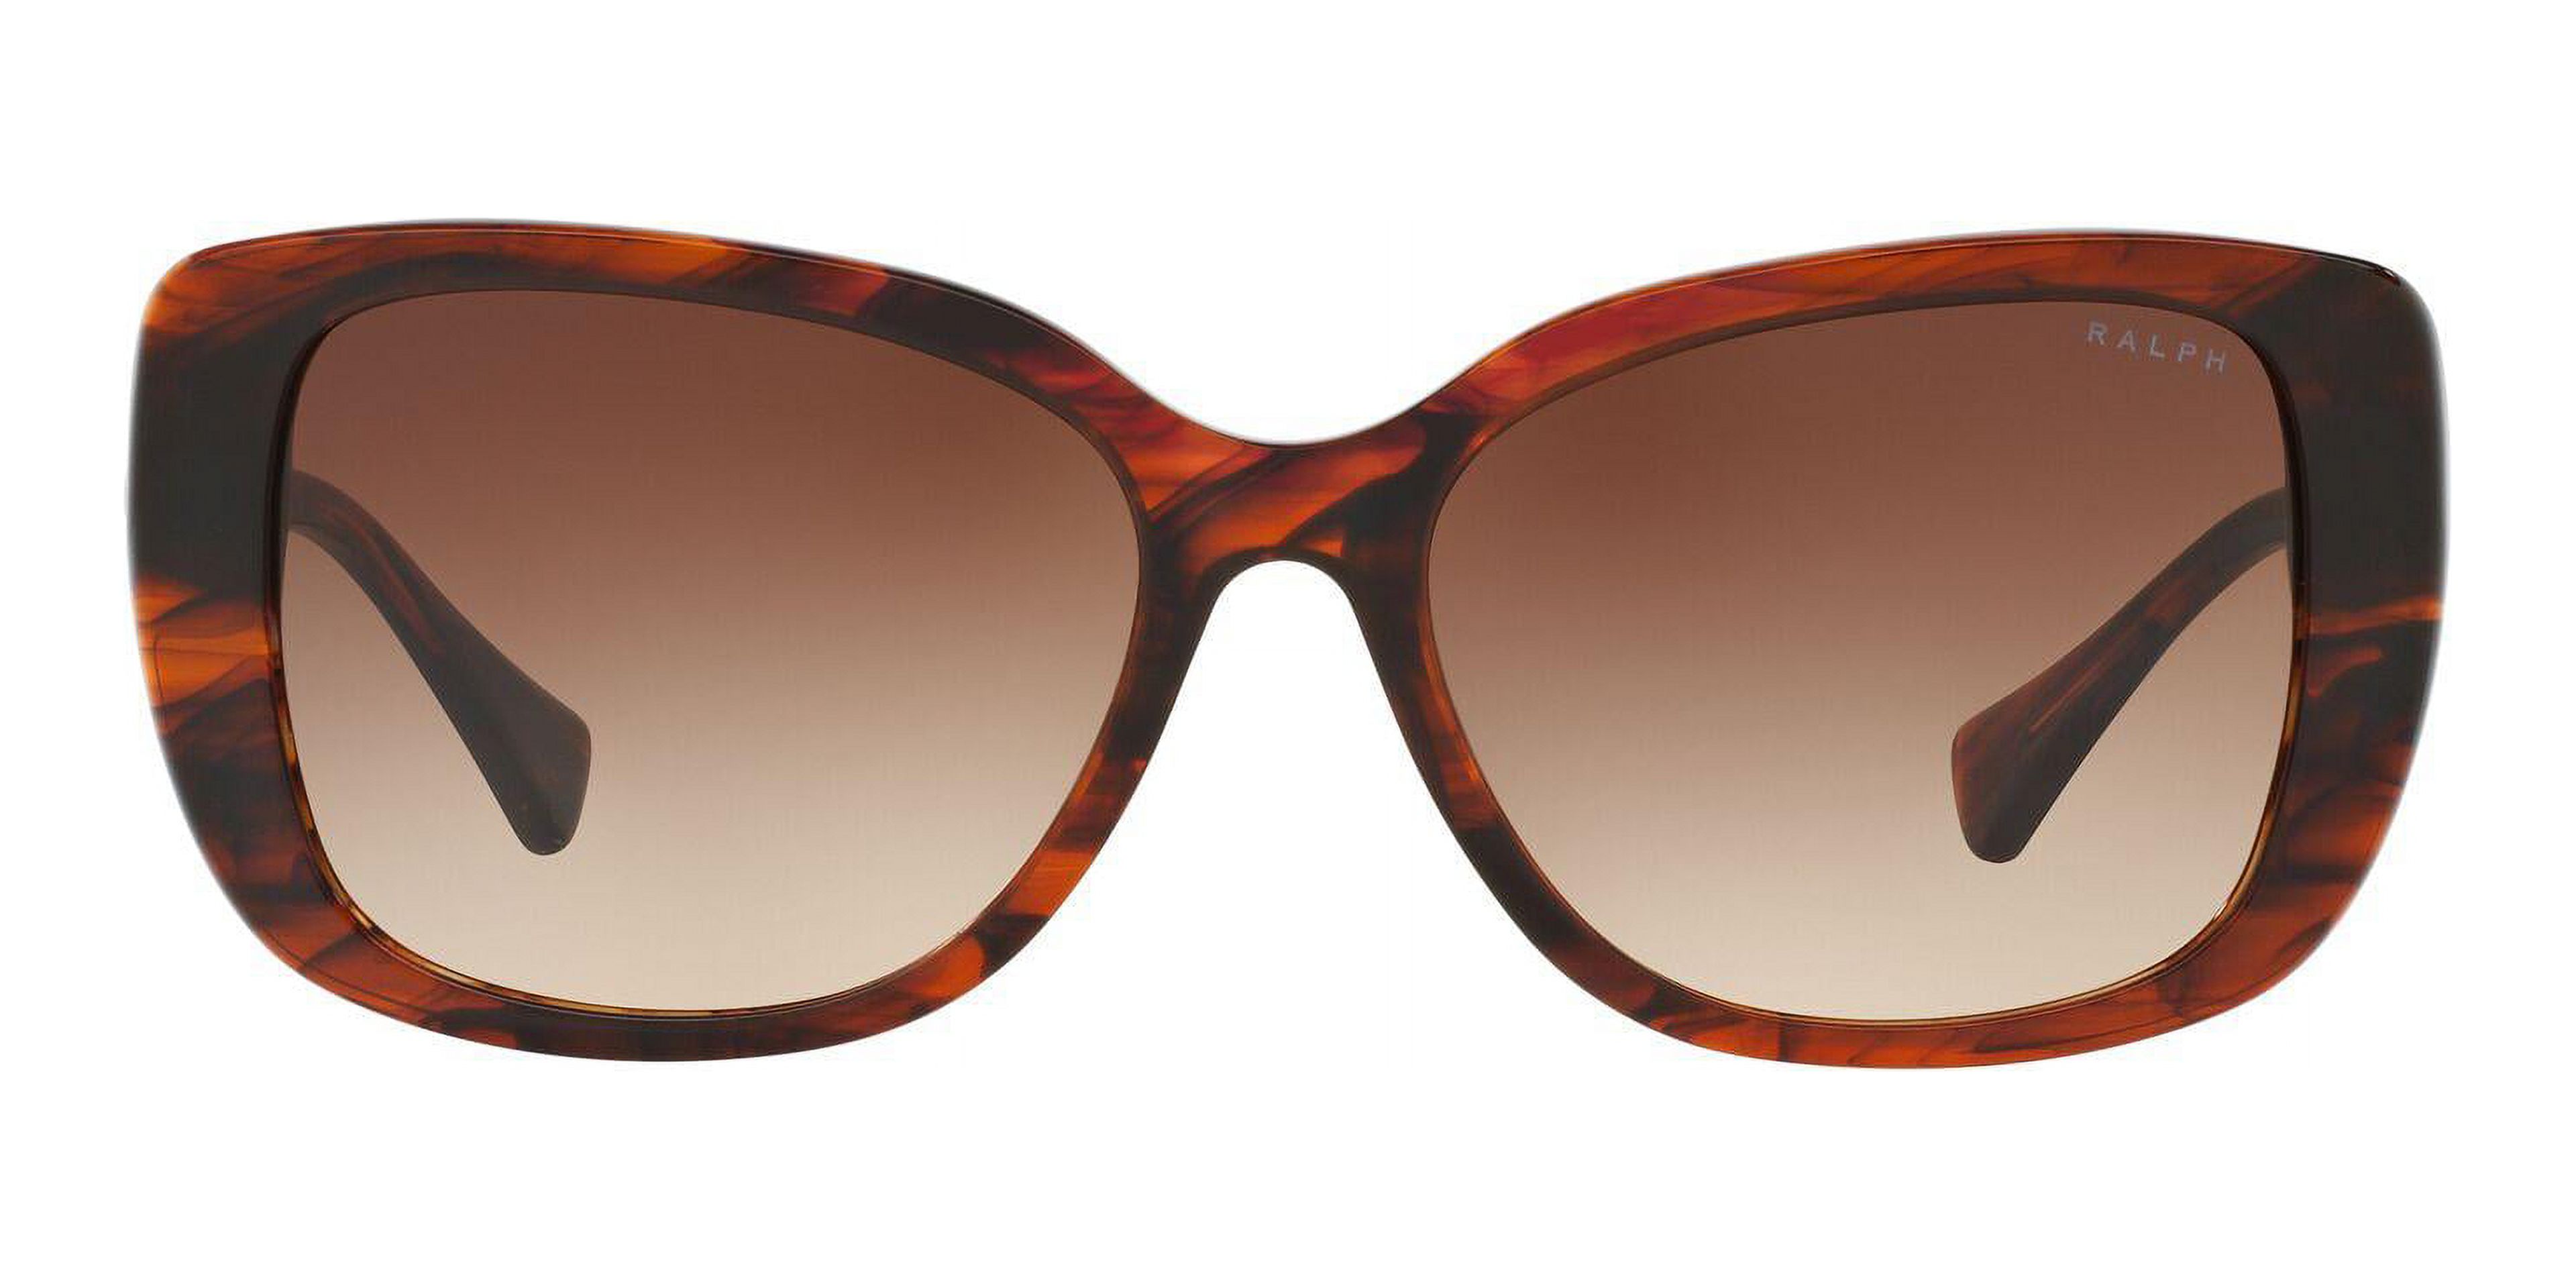 Sunglasses Ralph RA 5223 162513 Shiny Striped Brown - image 1 of 3